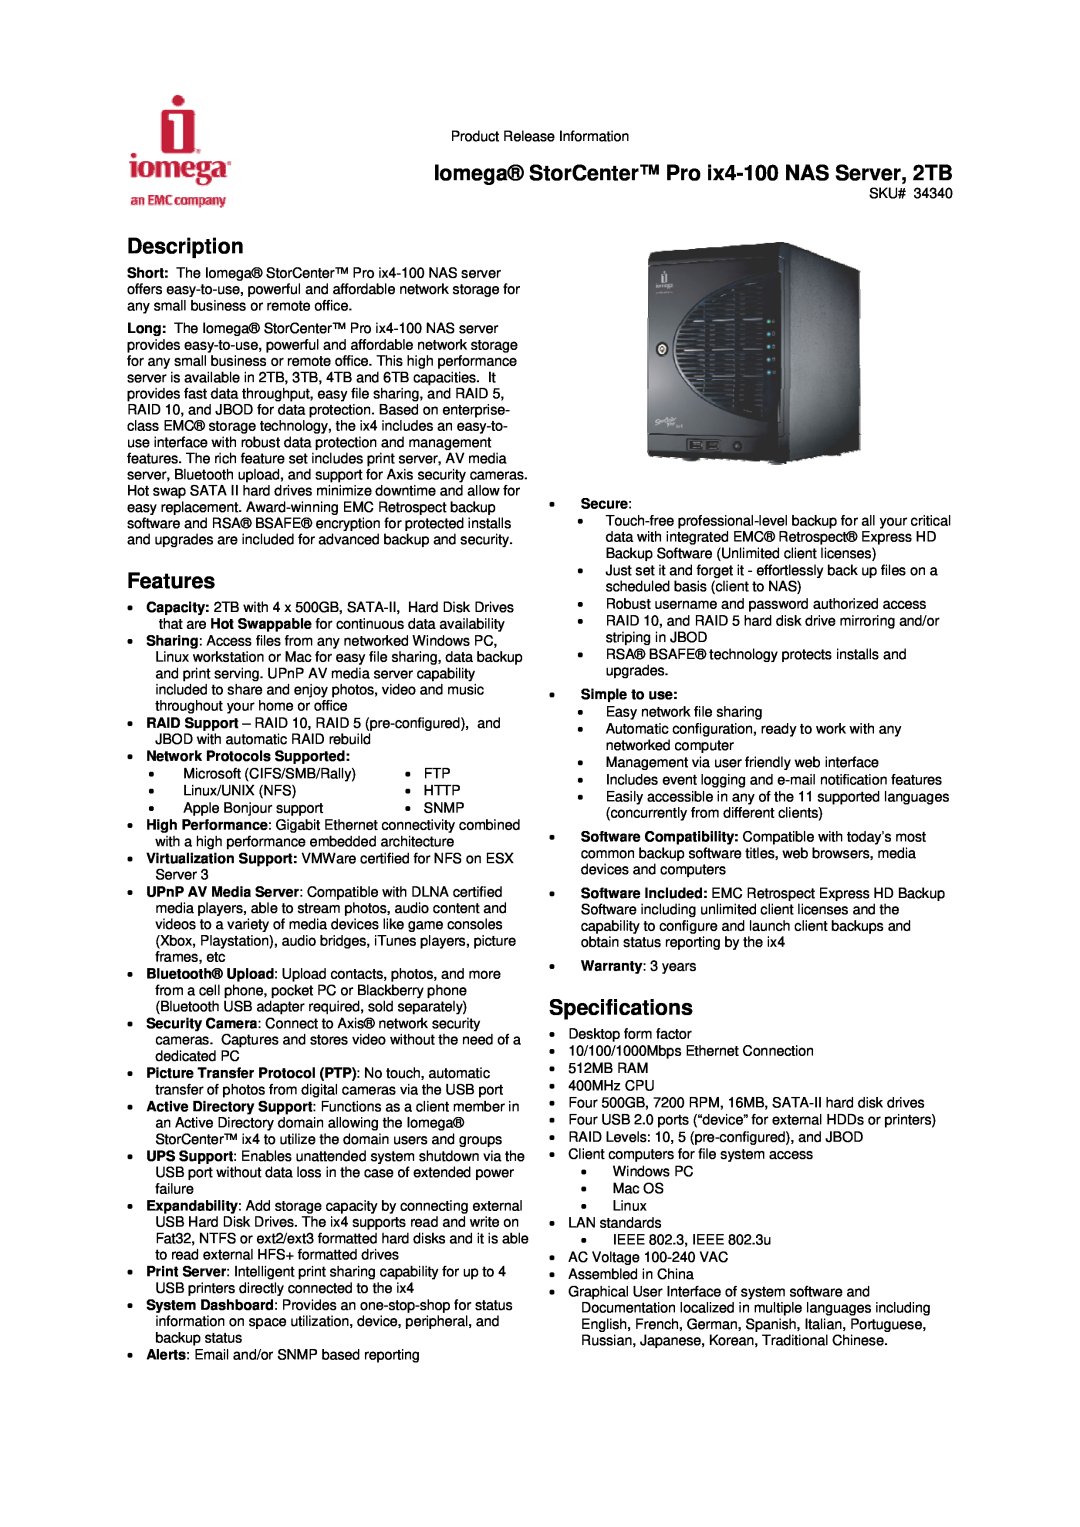 Iomega IX4-100 specifications Iomega StorCenter Pro ix4-100 NAS Server, 2TB, Description, Features, Specifications, Secure 